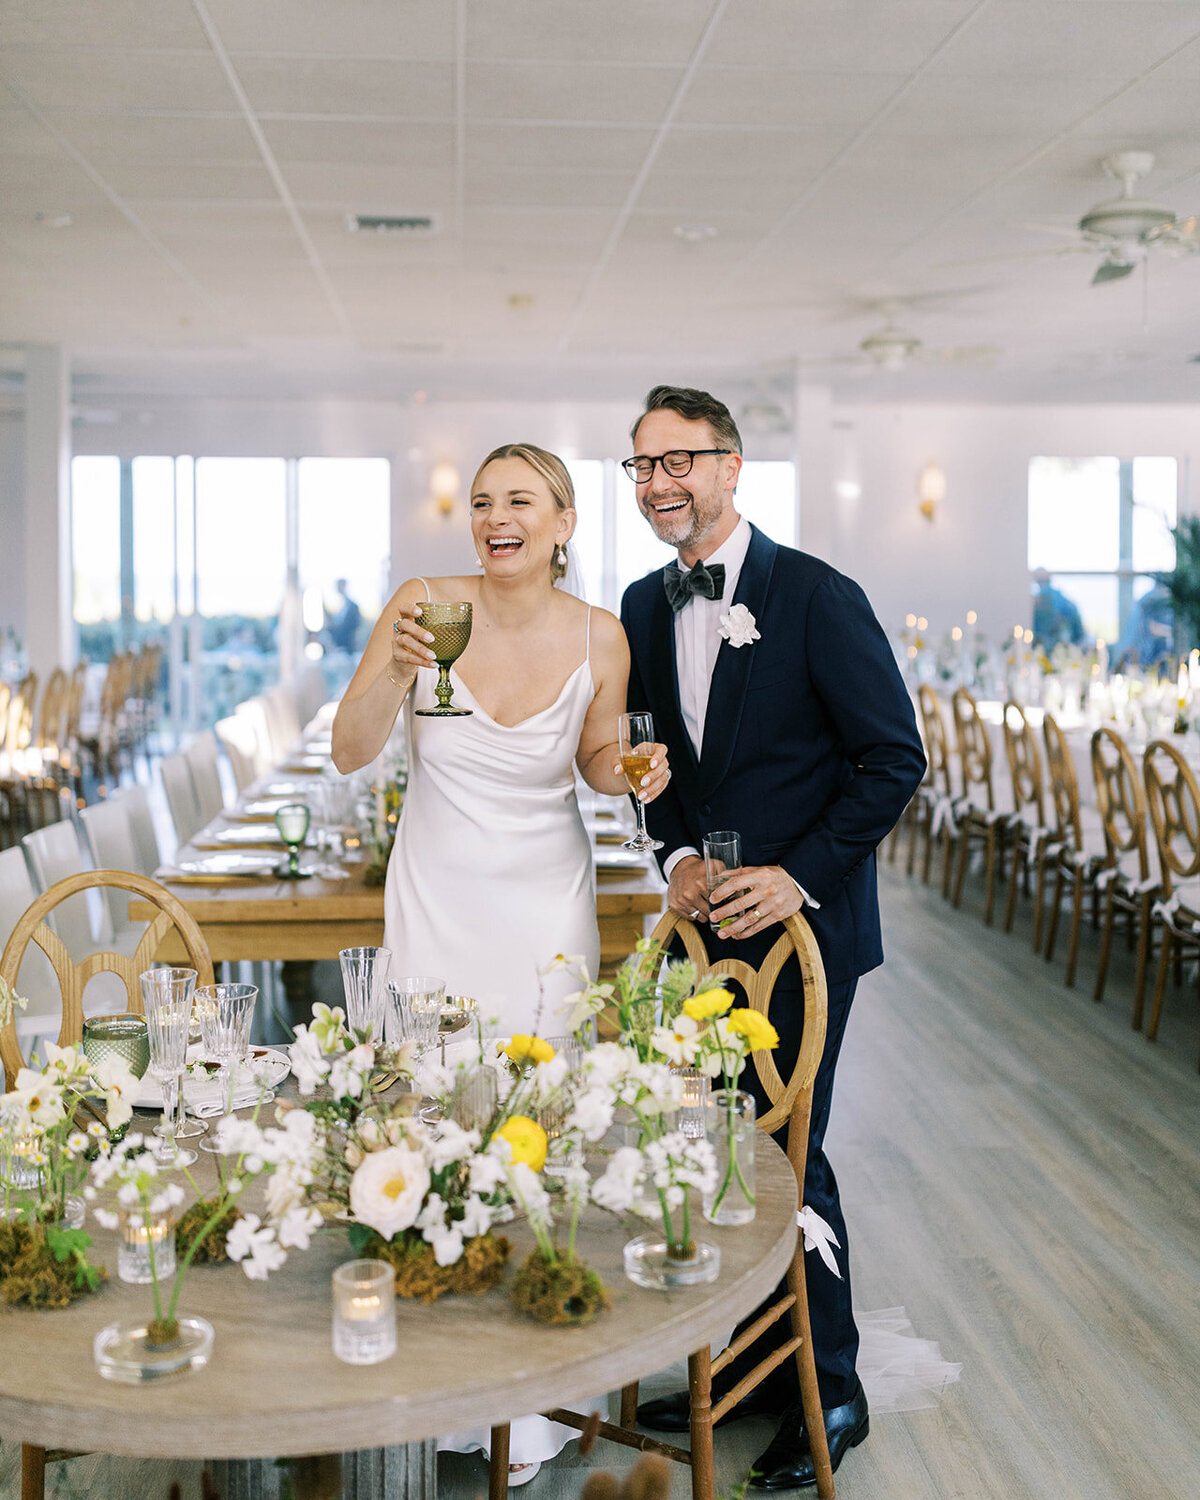 tess & DB - bride & groom - Chrissy O_Neill & Co. - South Florida Wedding Photographer-122